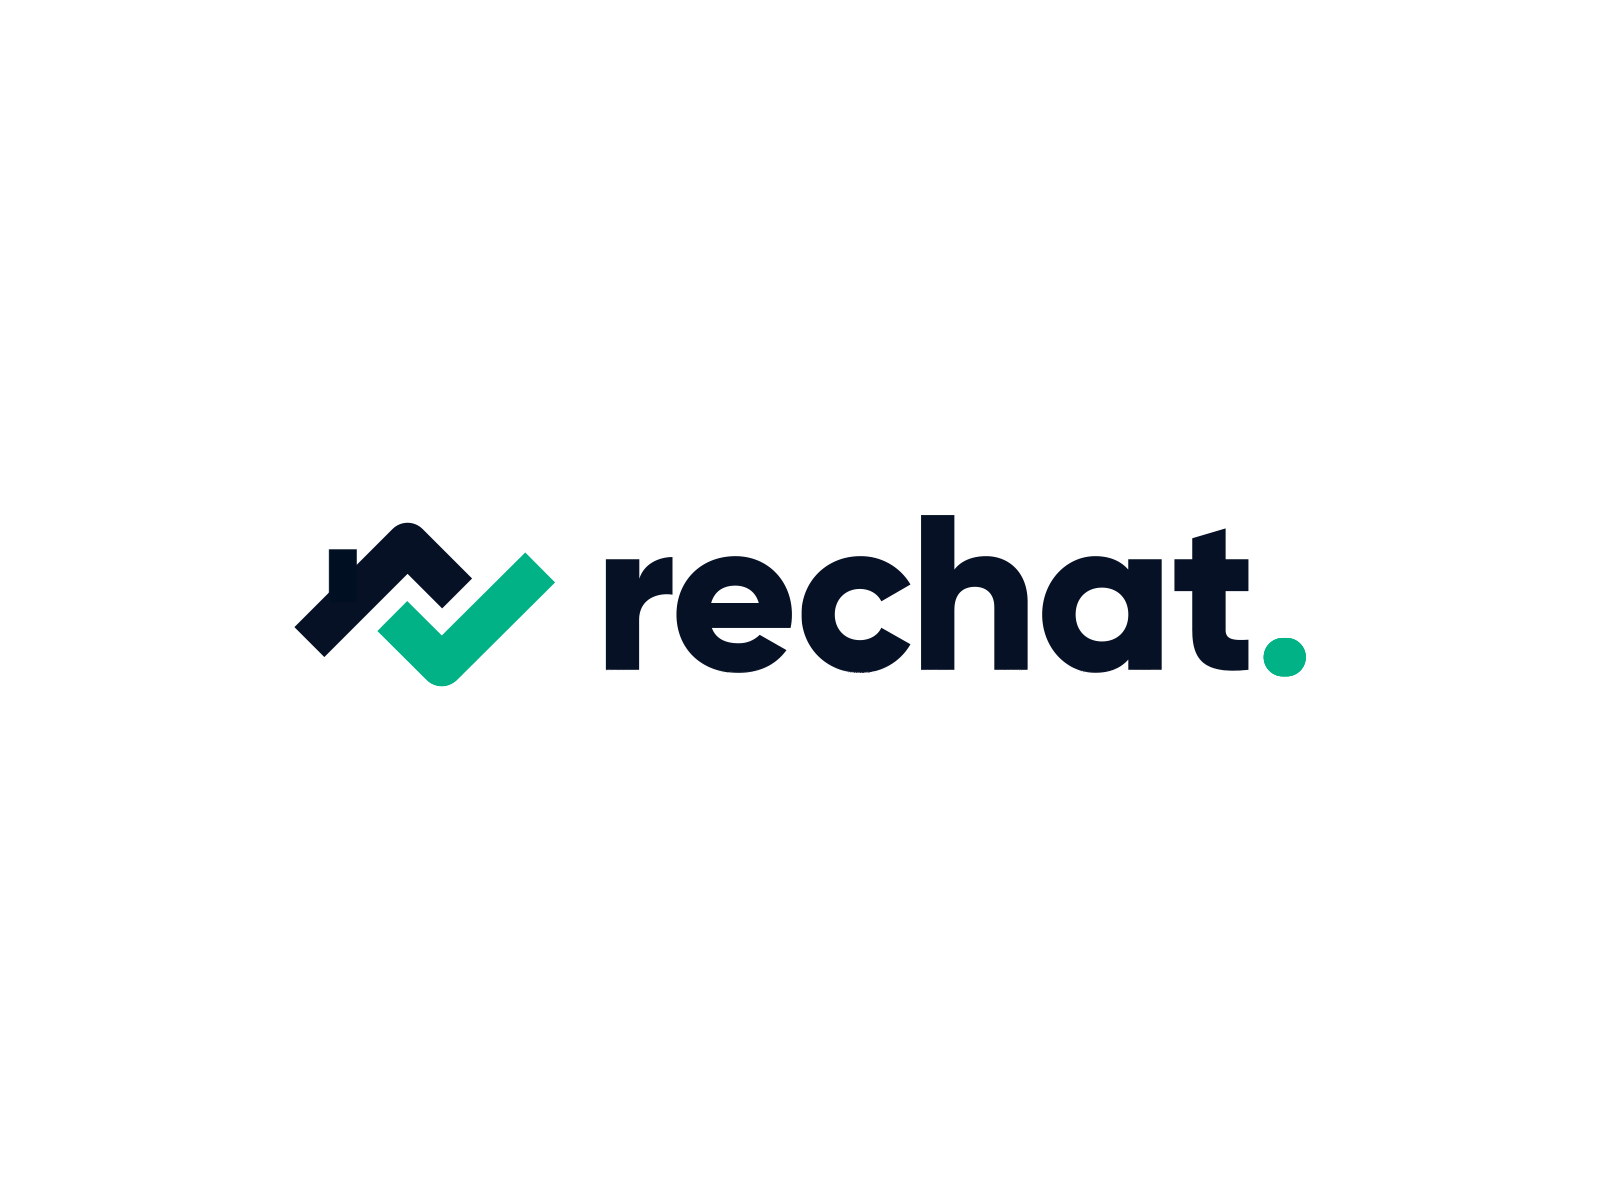 Rechat Logo Animation